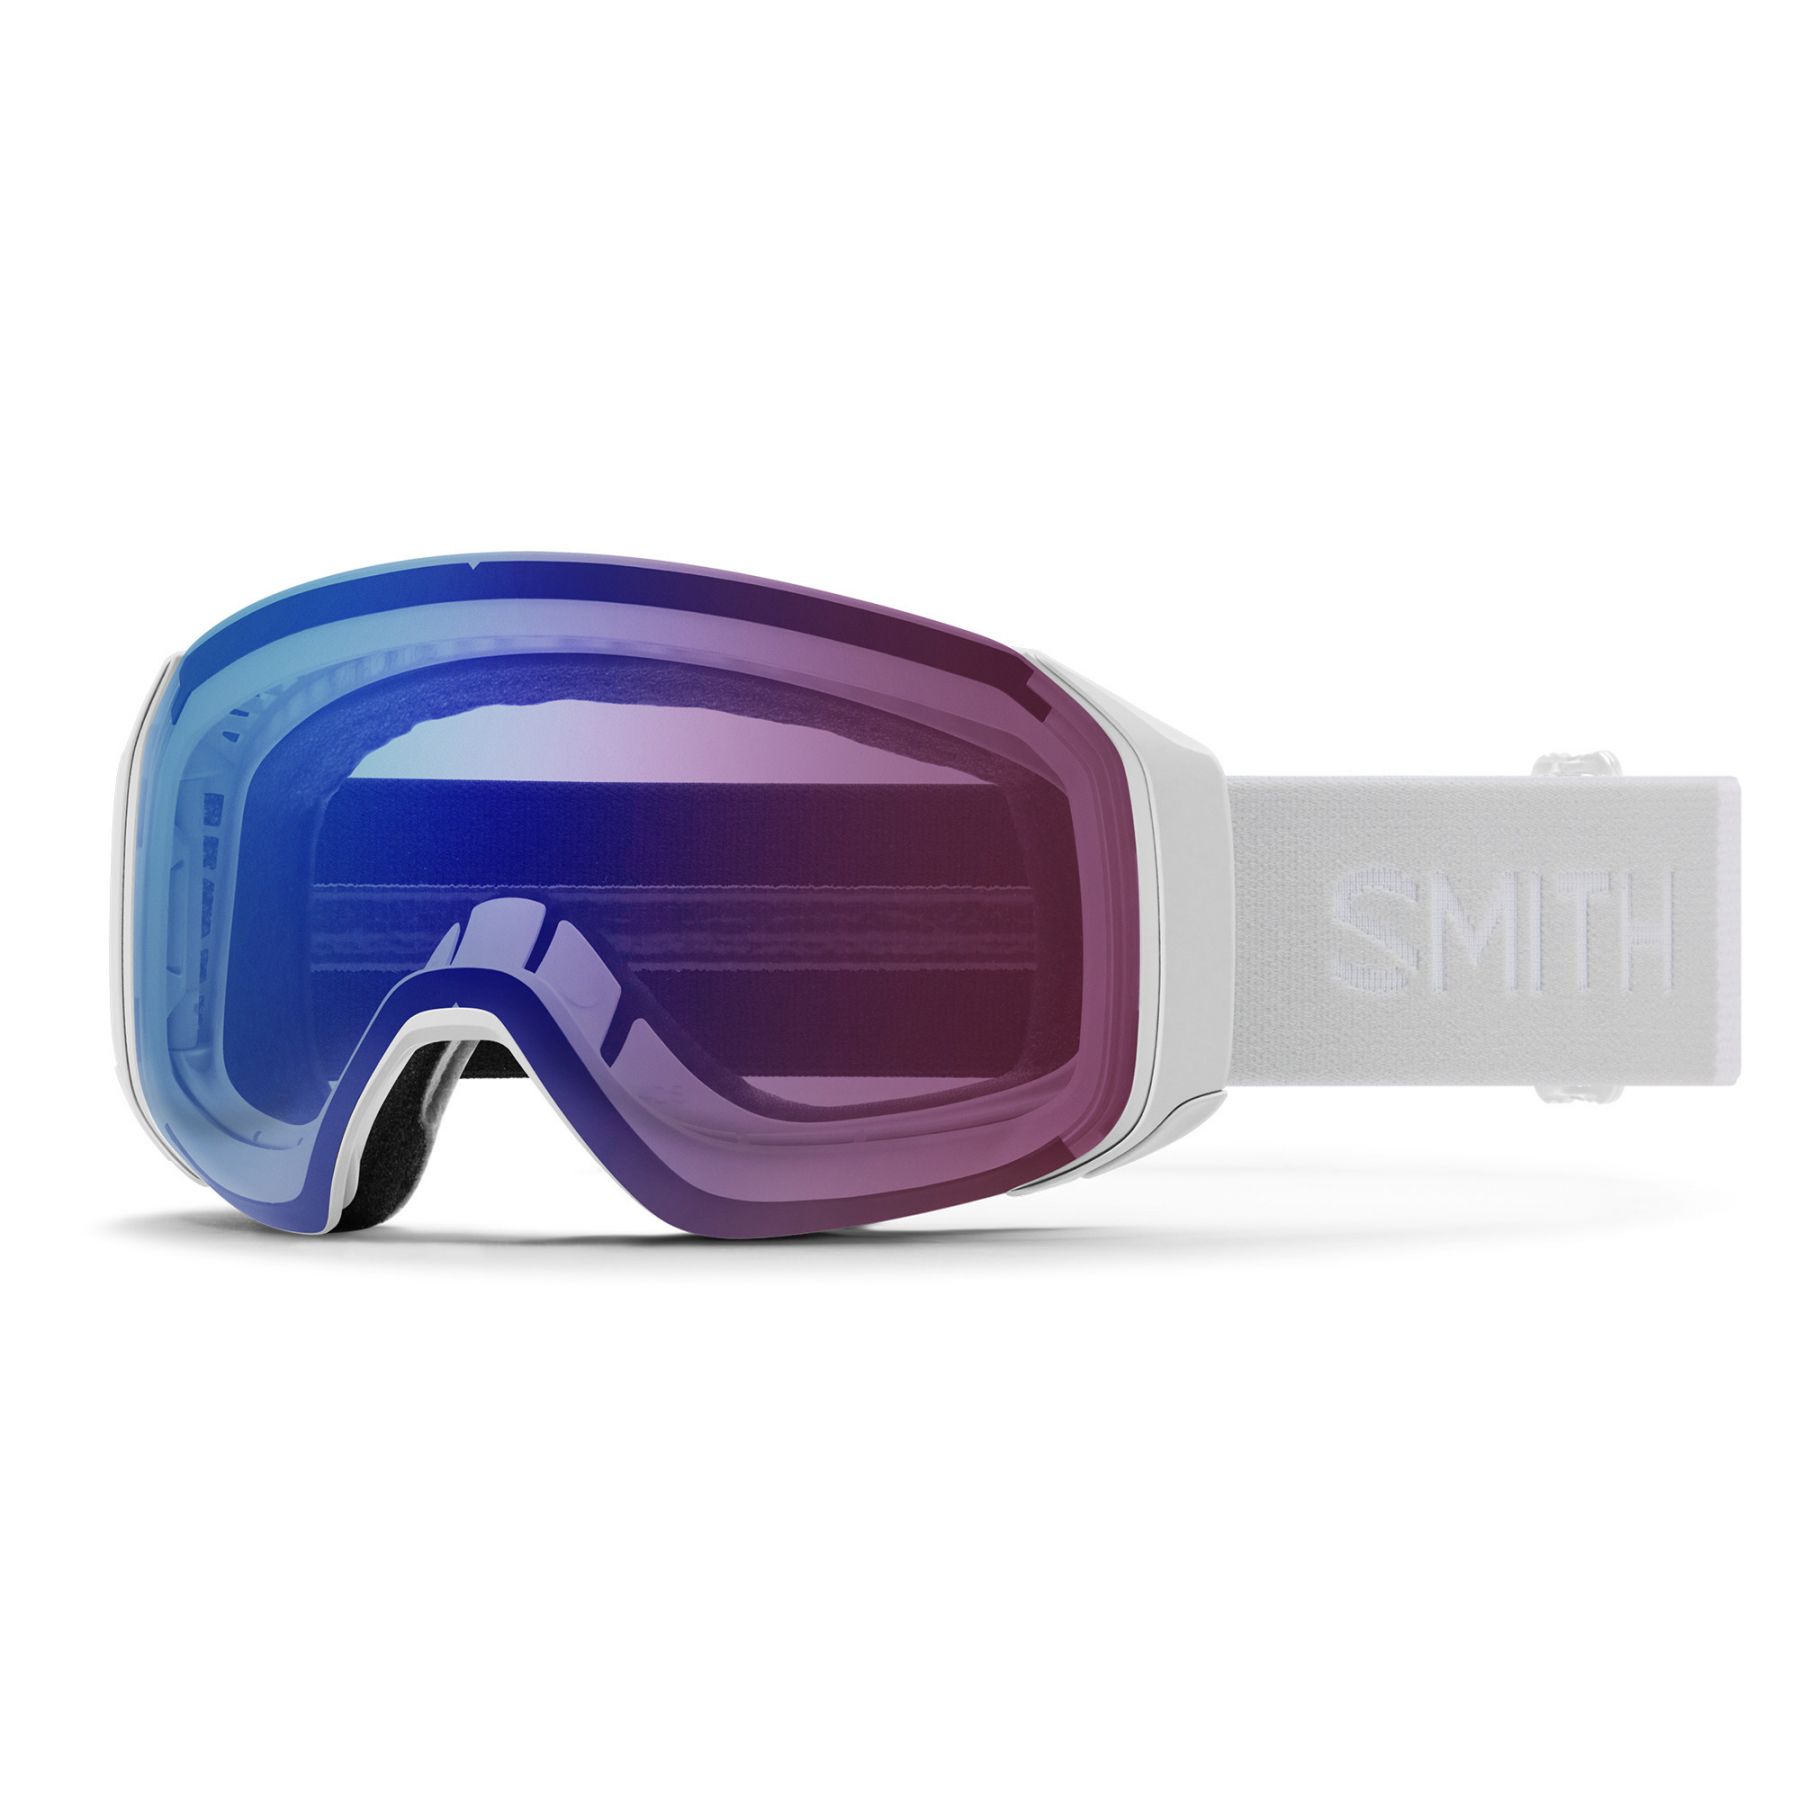 Smith 4D MAG S, skibrille, hvid thumbnail